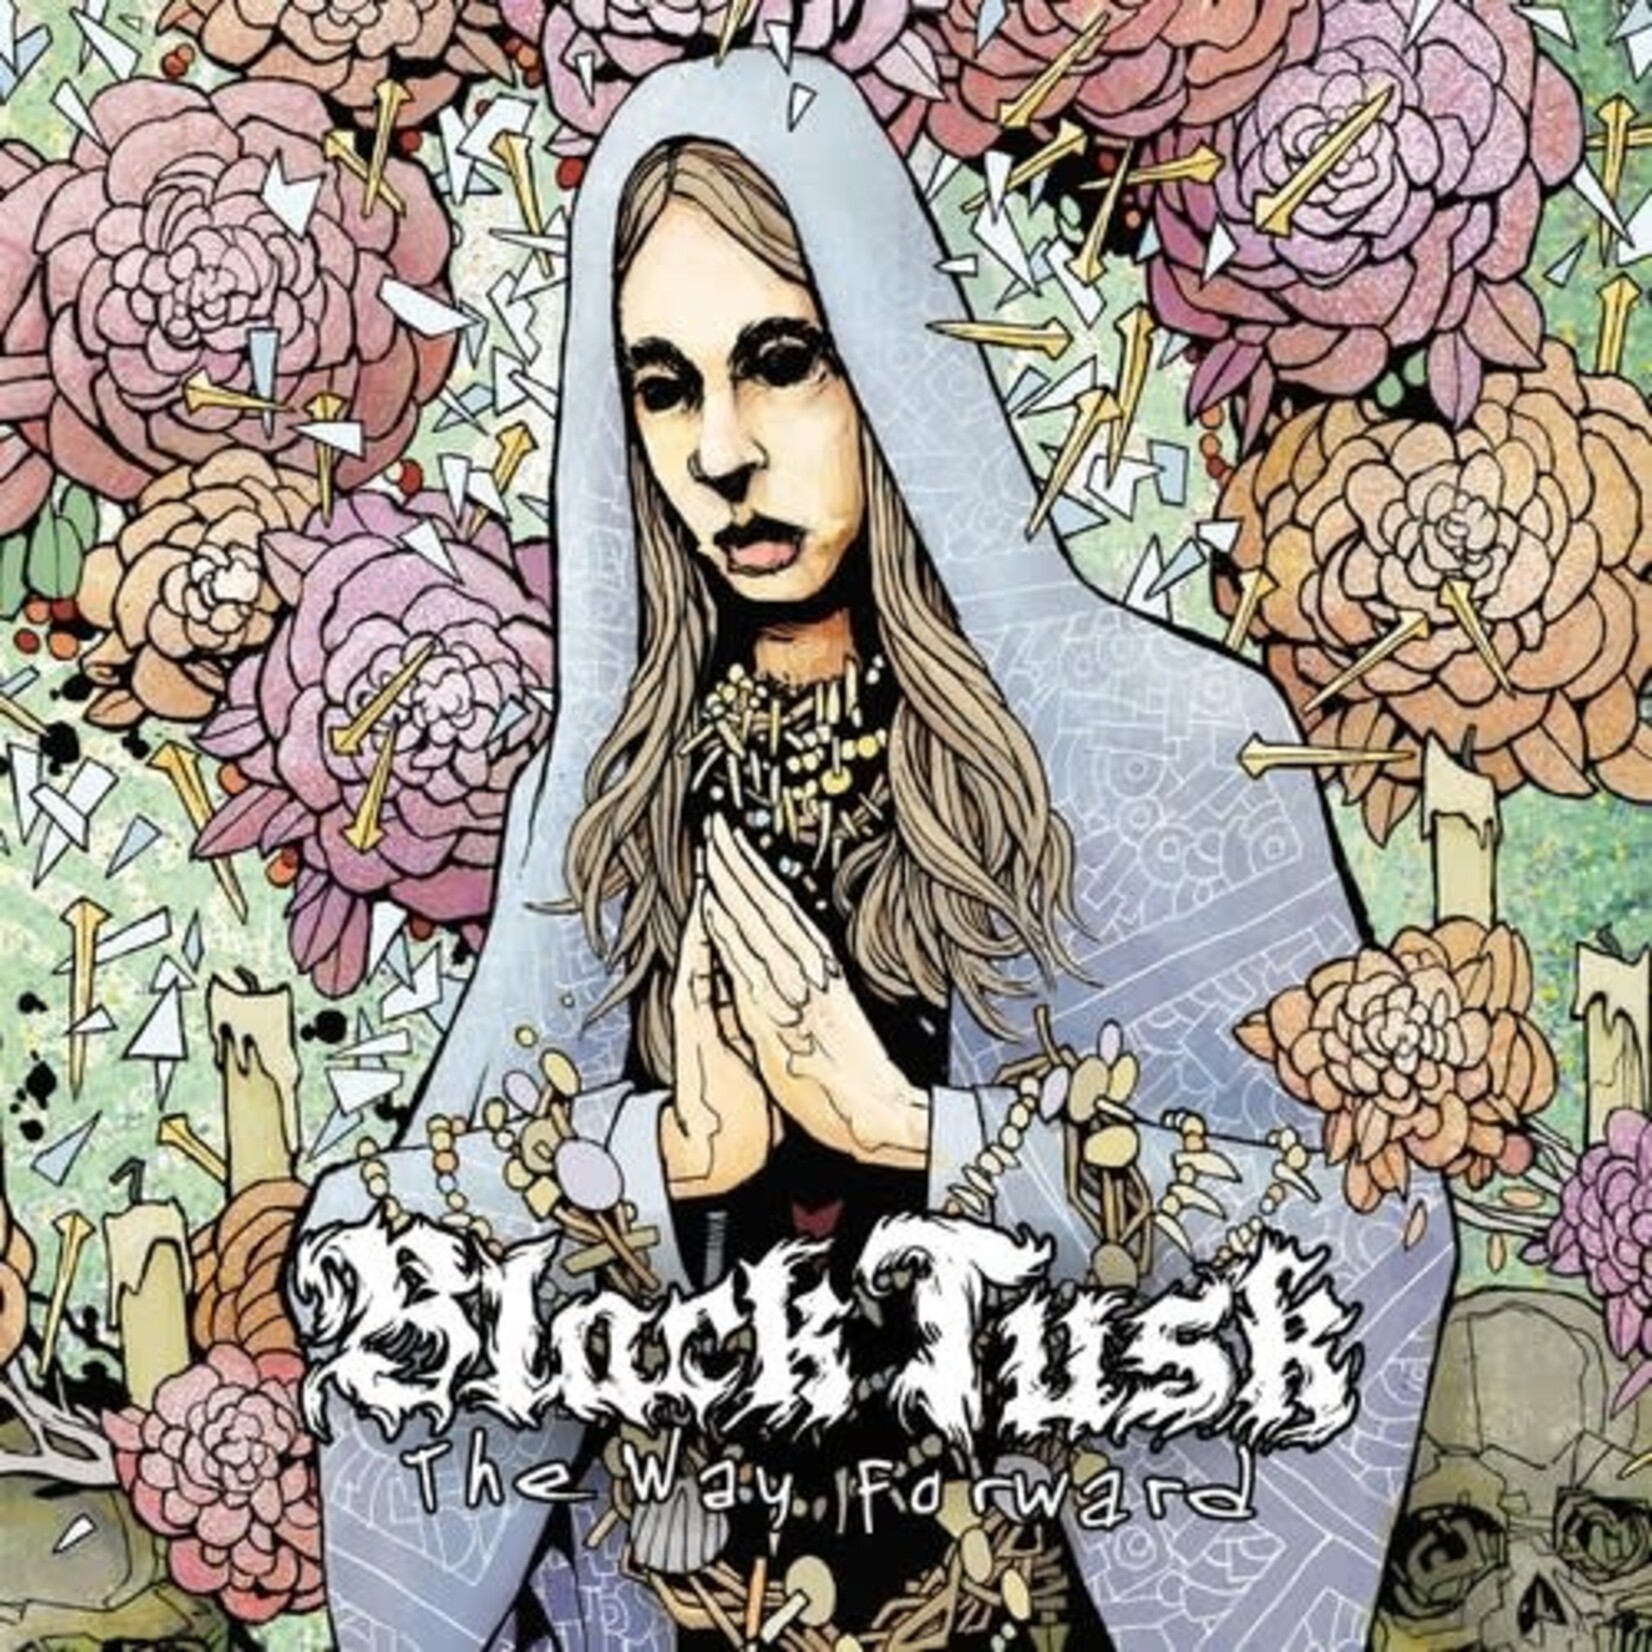 Season of Mist Black Tusk - The Way Forward (CD)